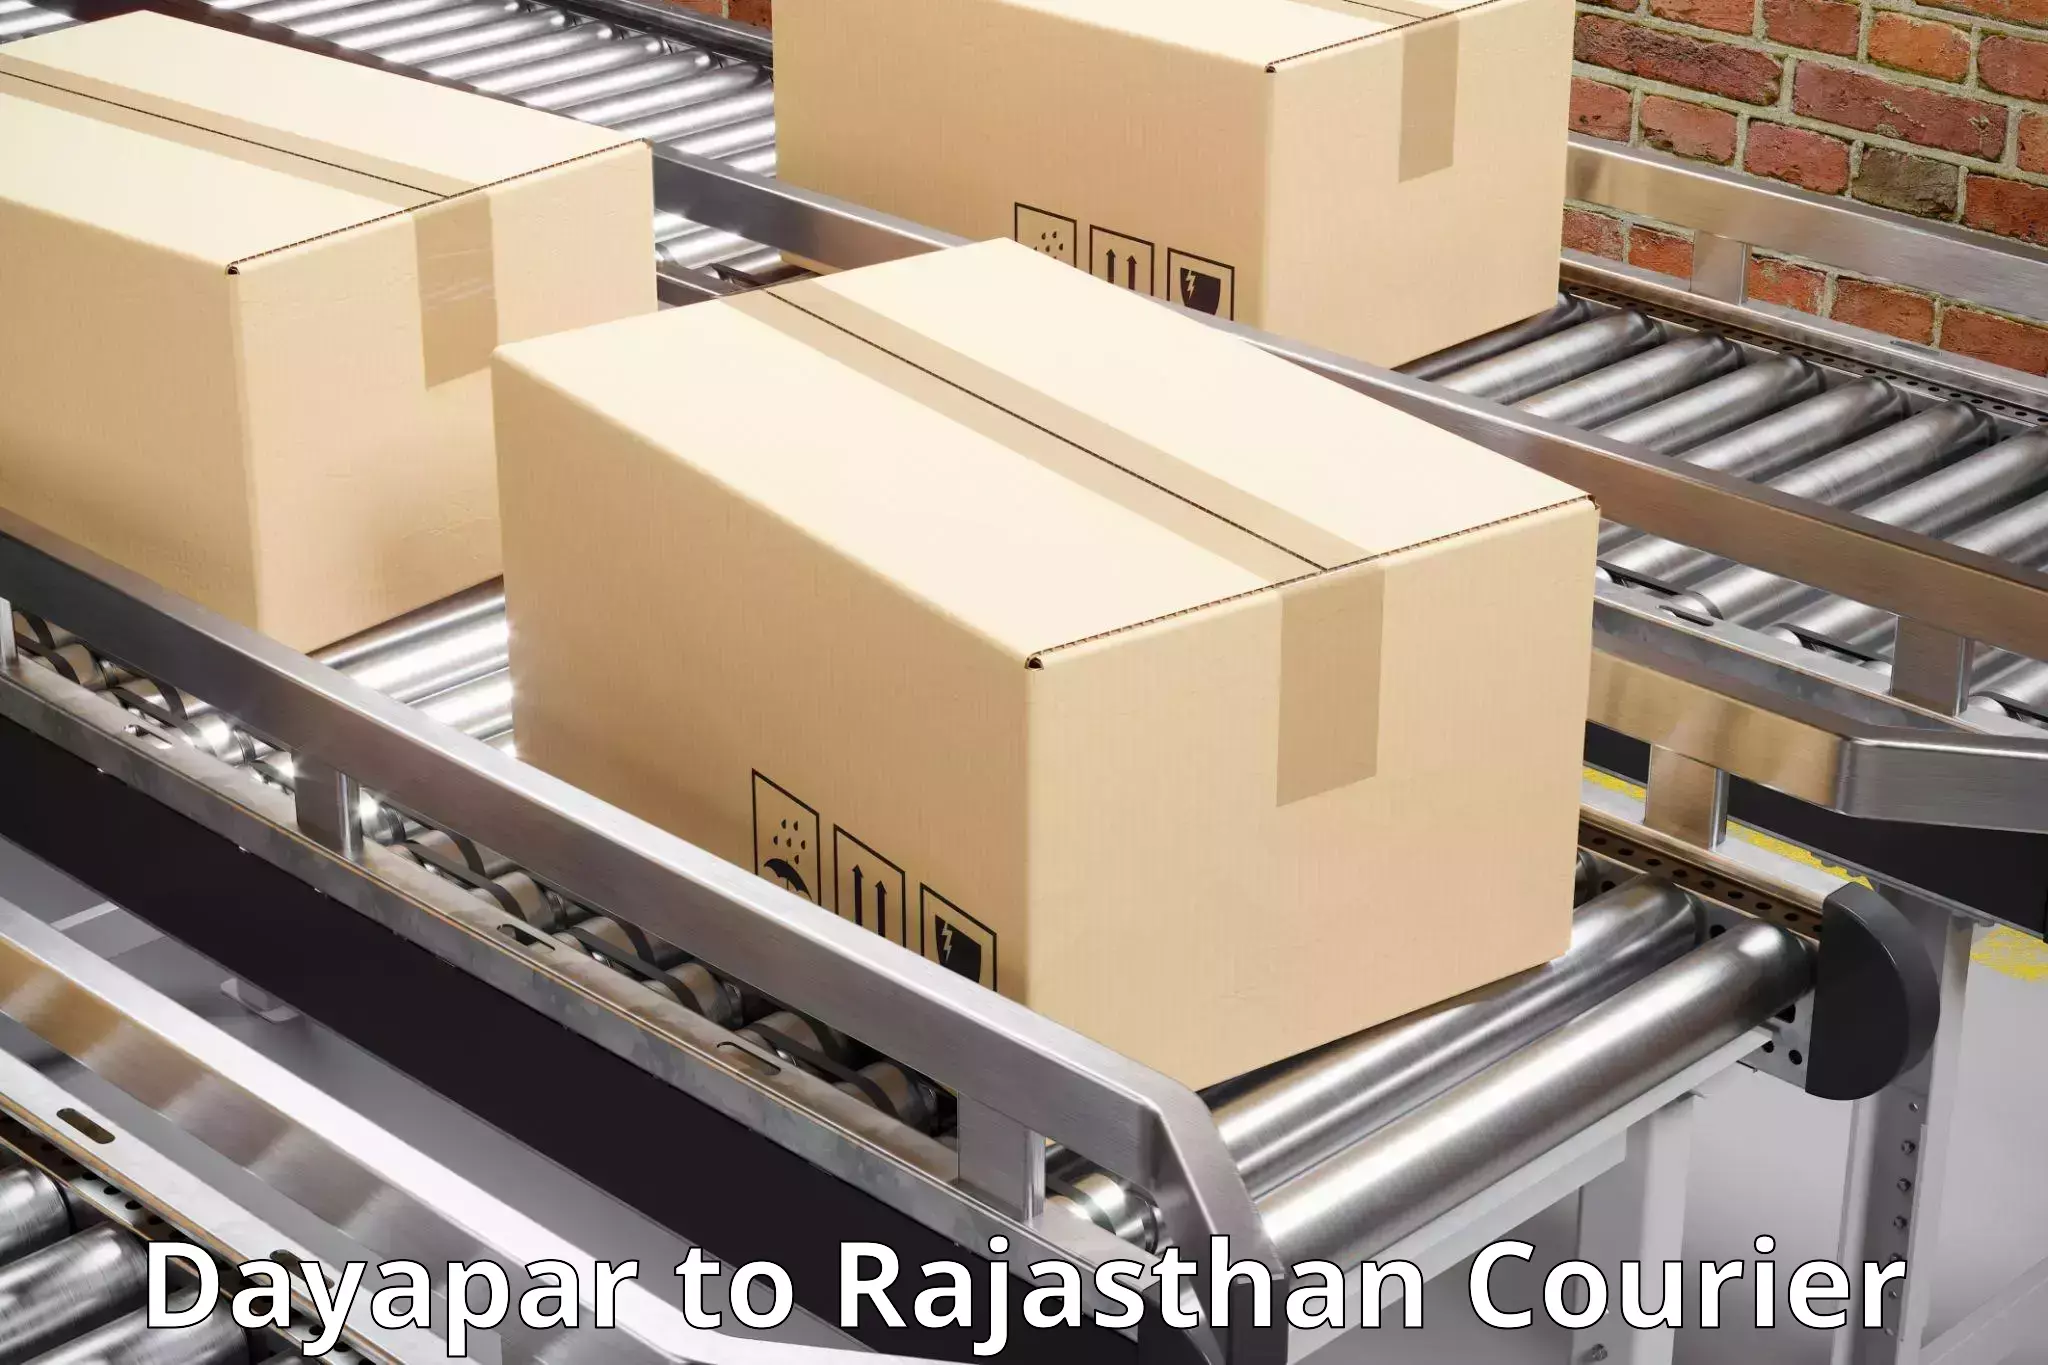 Advanced courier platforms Dayapar to Kumbhalgarh